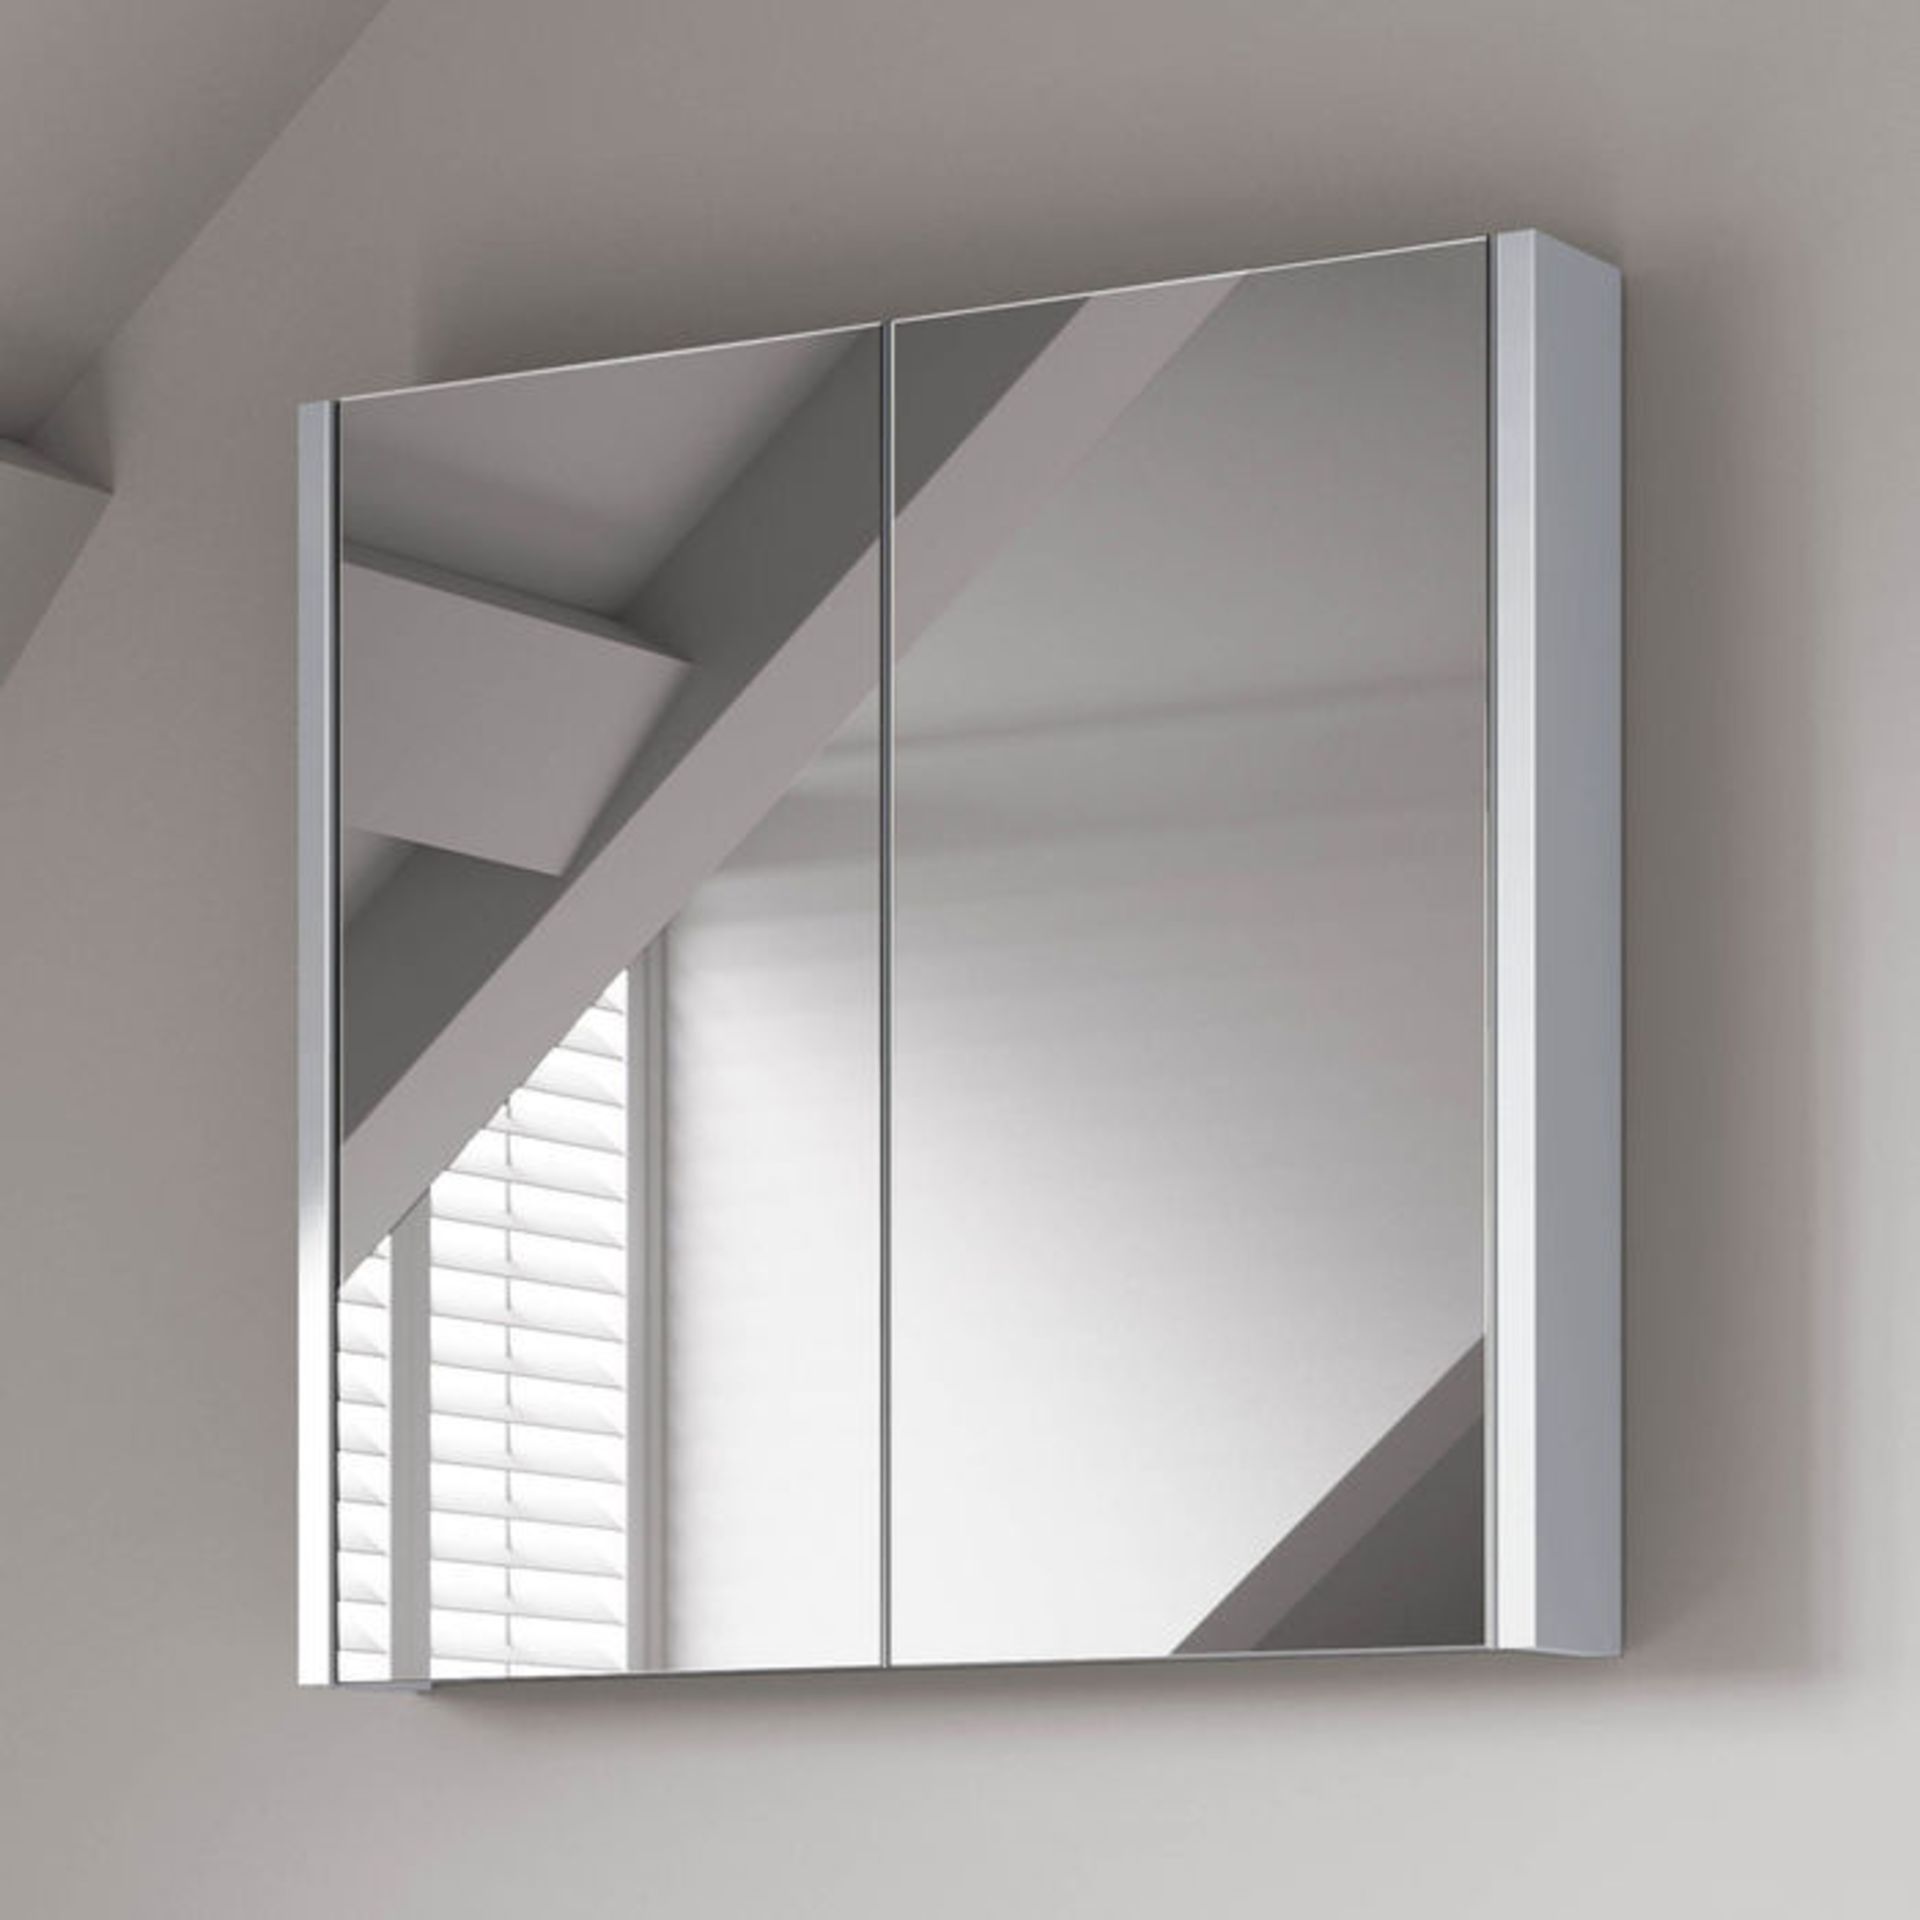 (AL171) 600mm Gloss White Double Door Mirror Cabinet. RRP £174.99. Sleek contemporary design